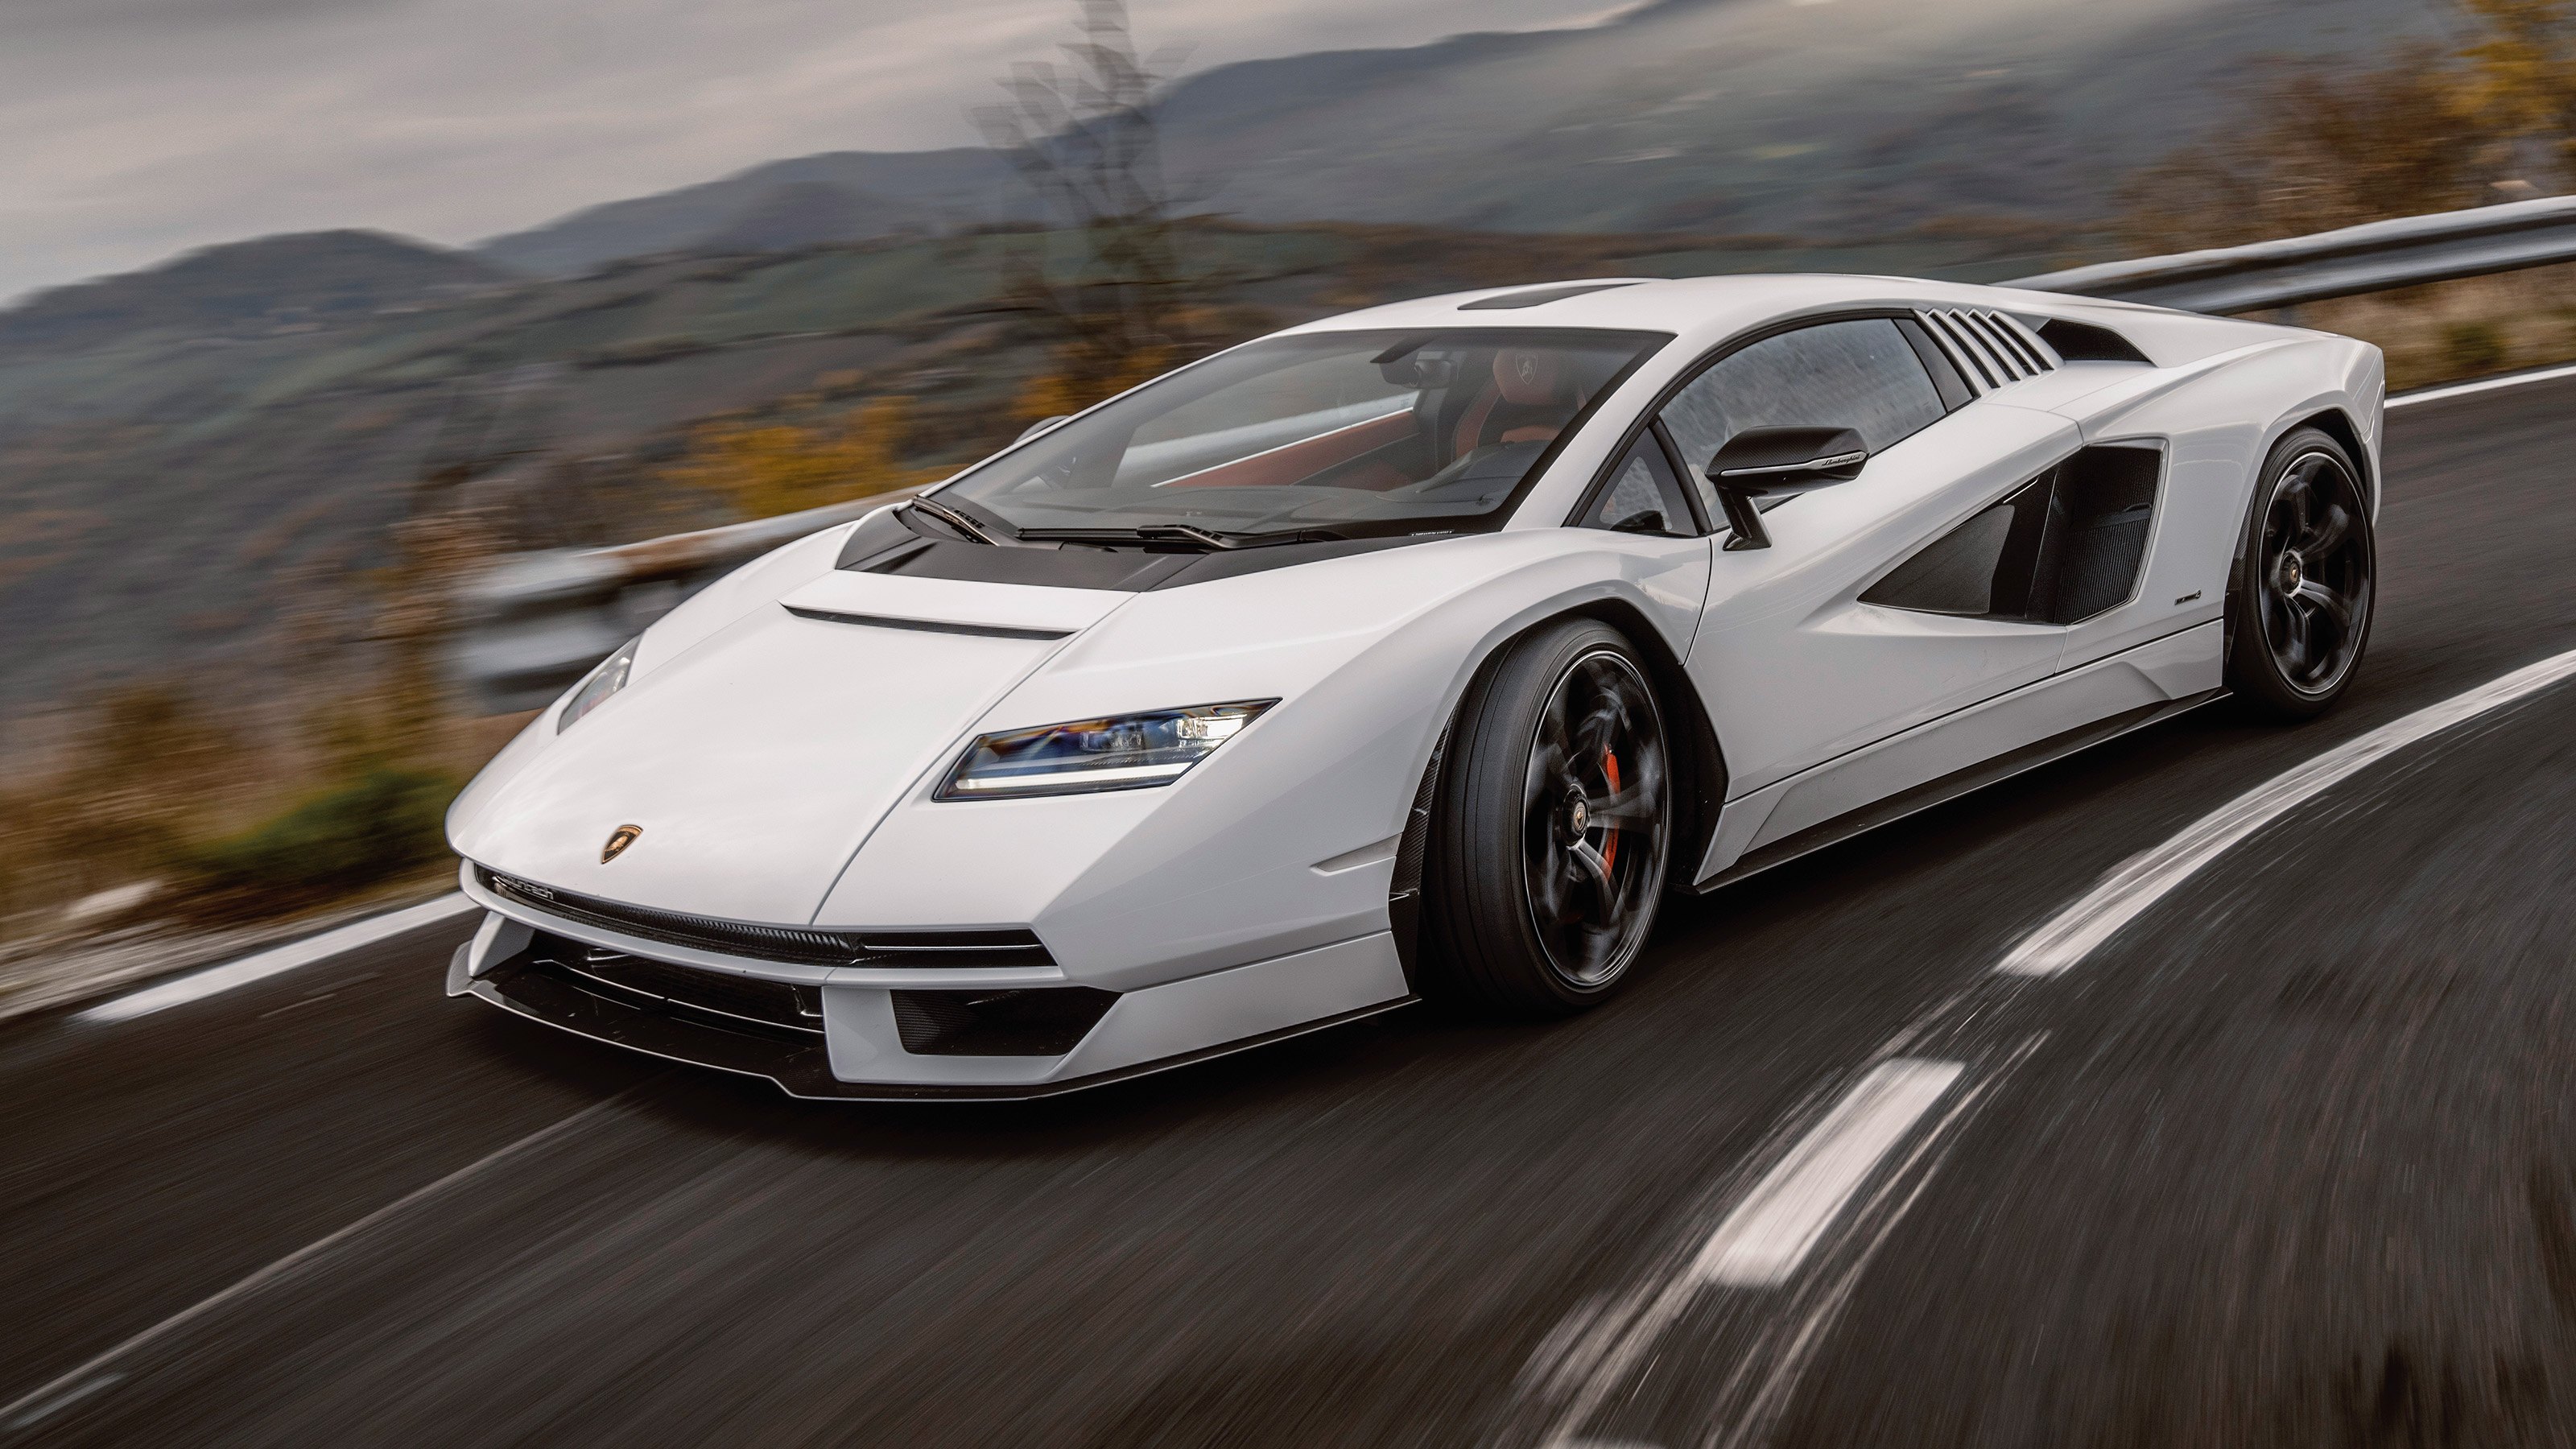 Lamborghini%20Countach%20LPI%208004%20on%20road.jpg